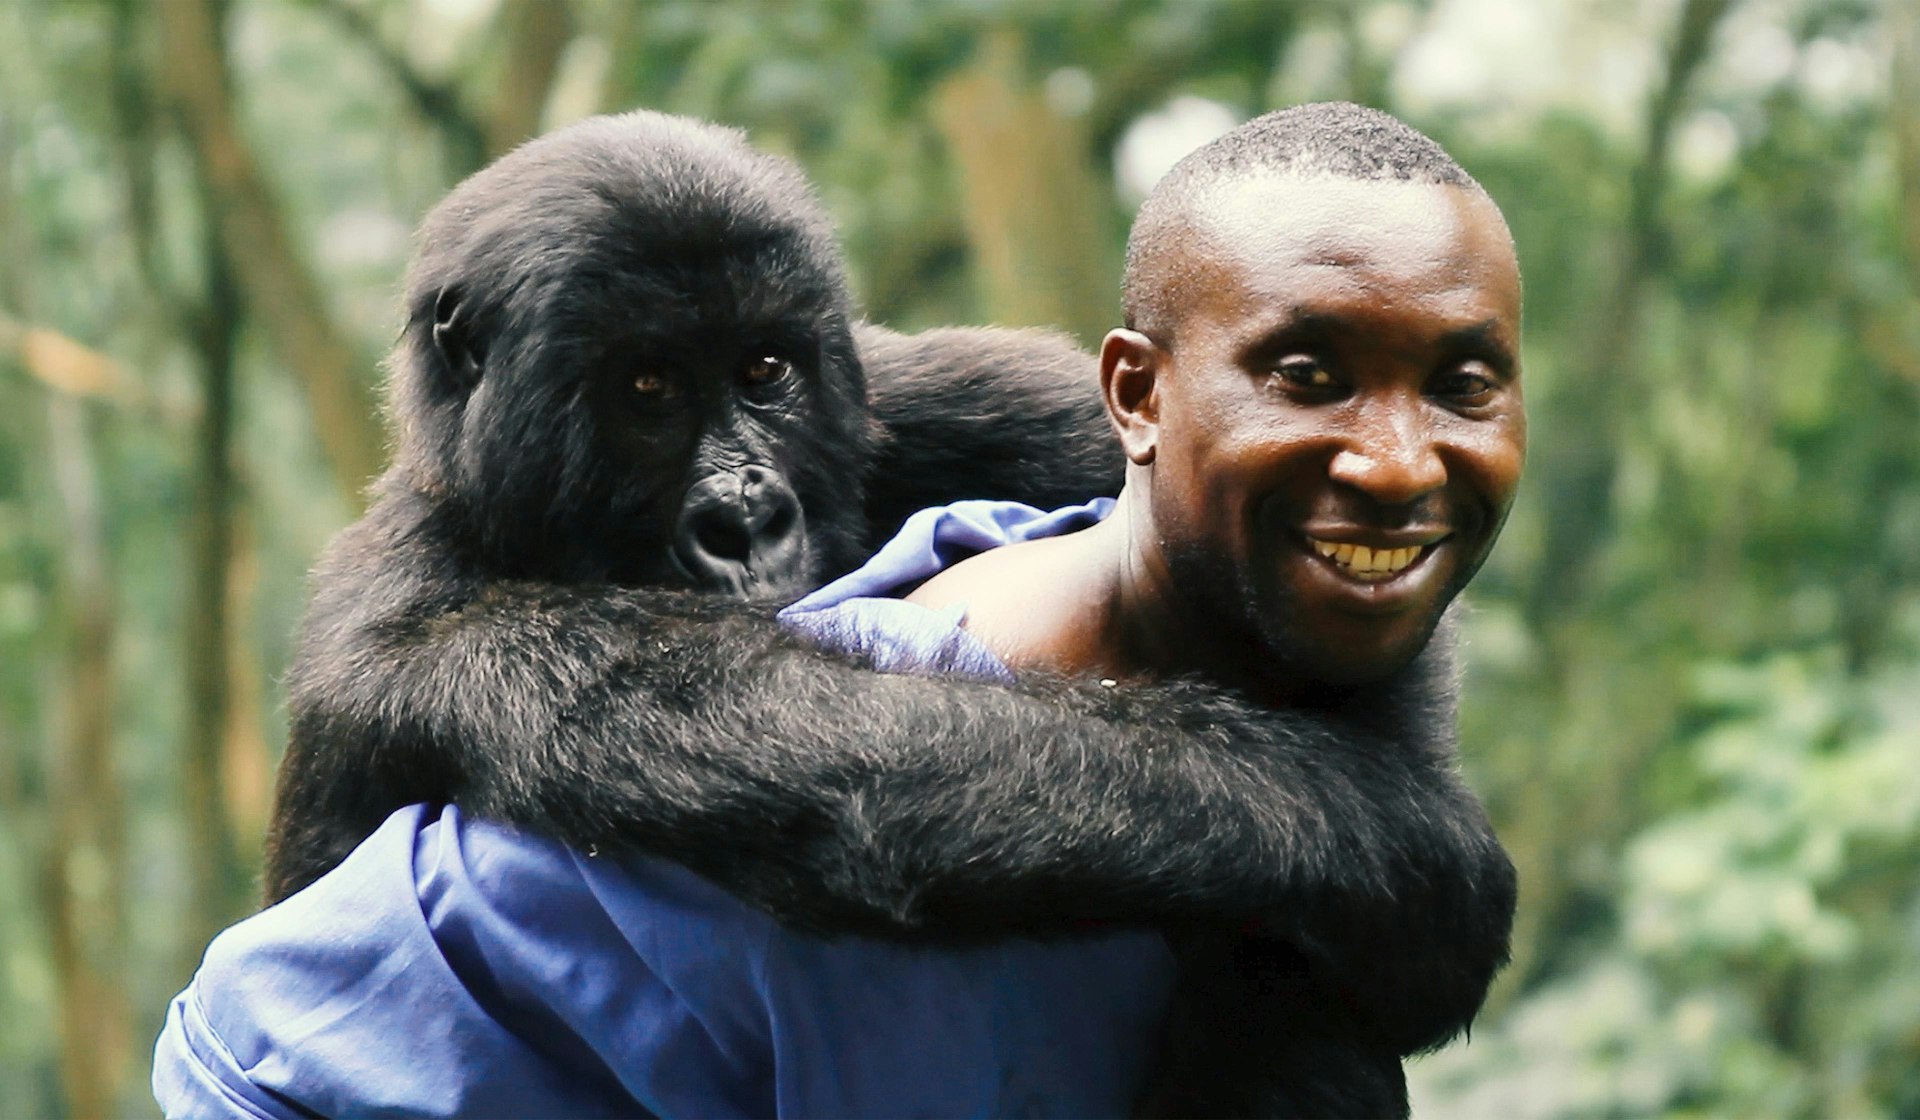 Virunga captures a fierce battle over the world’s last mountain gorillas